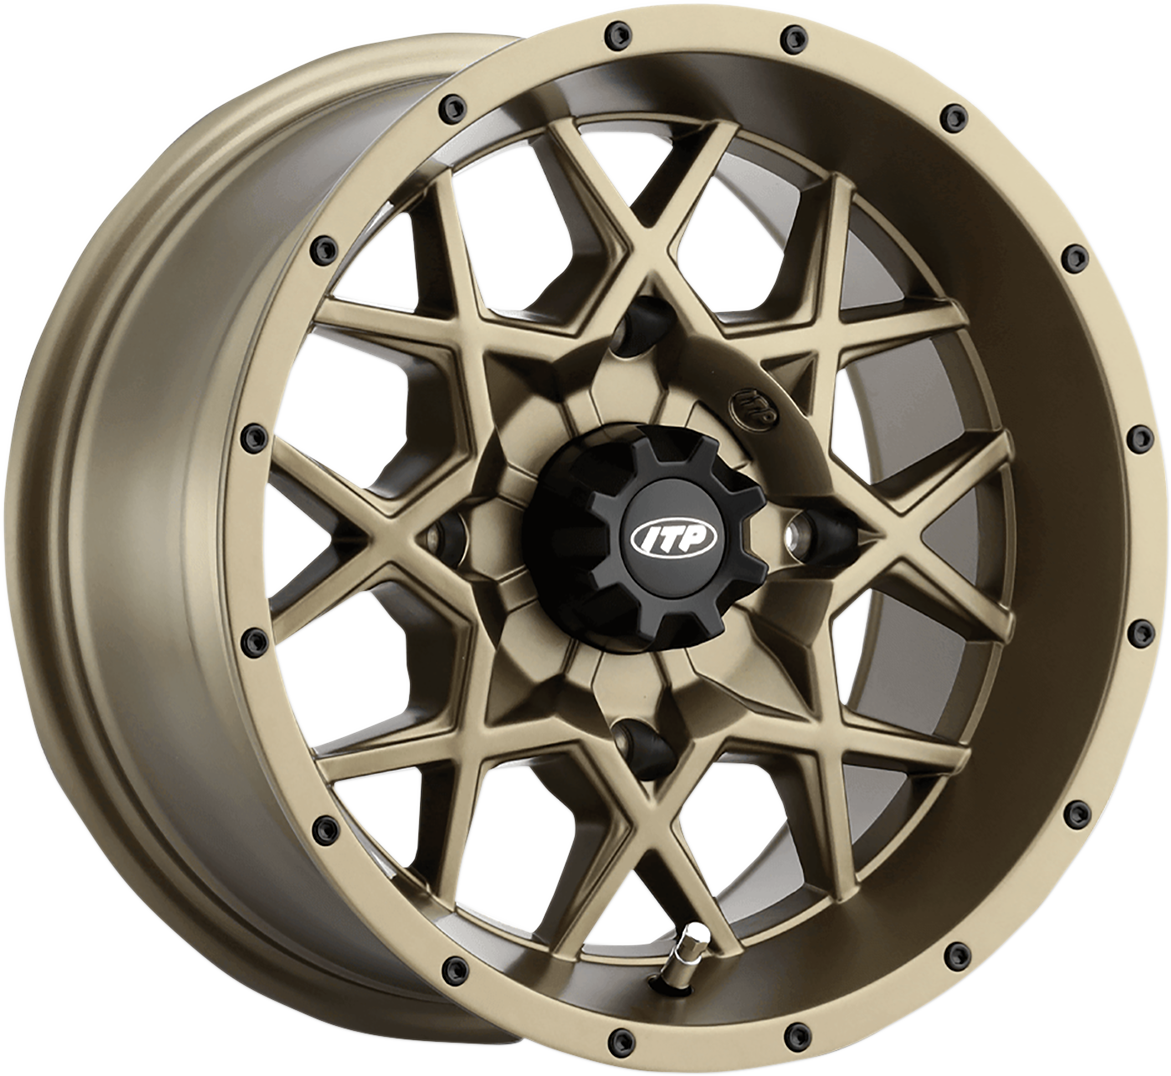 ITP Wheel - Hurricane - Front/Rear - Bronze - 14x7 - 4/156 - 4+3 1428638729B